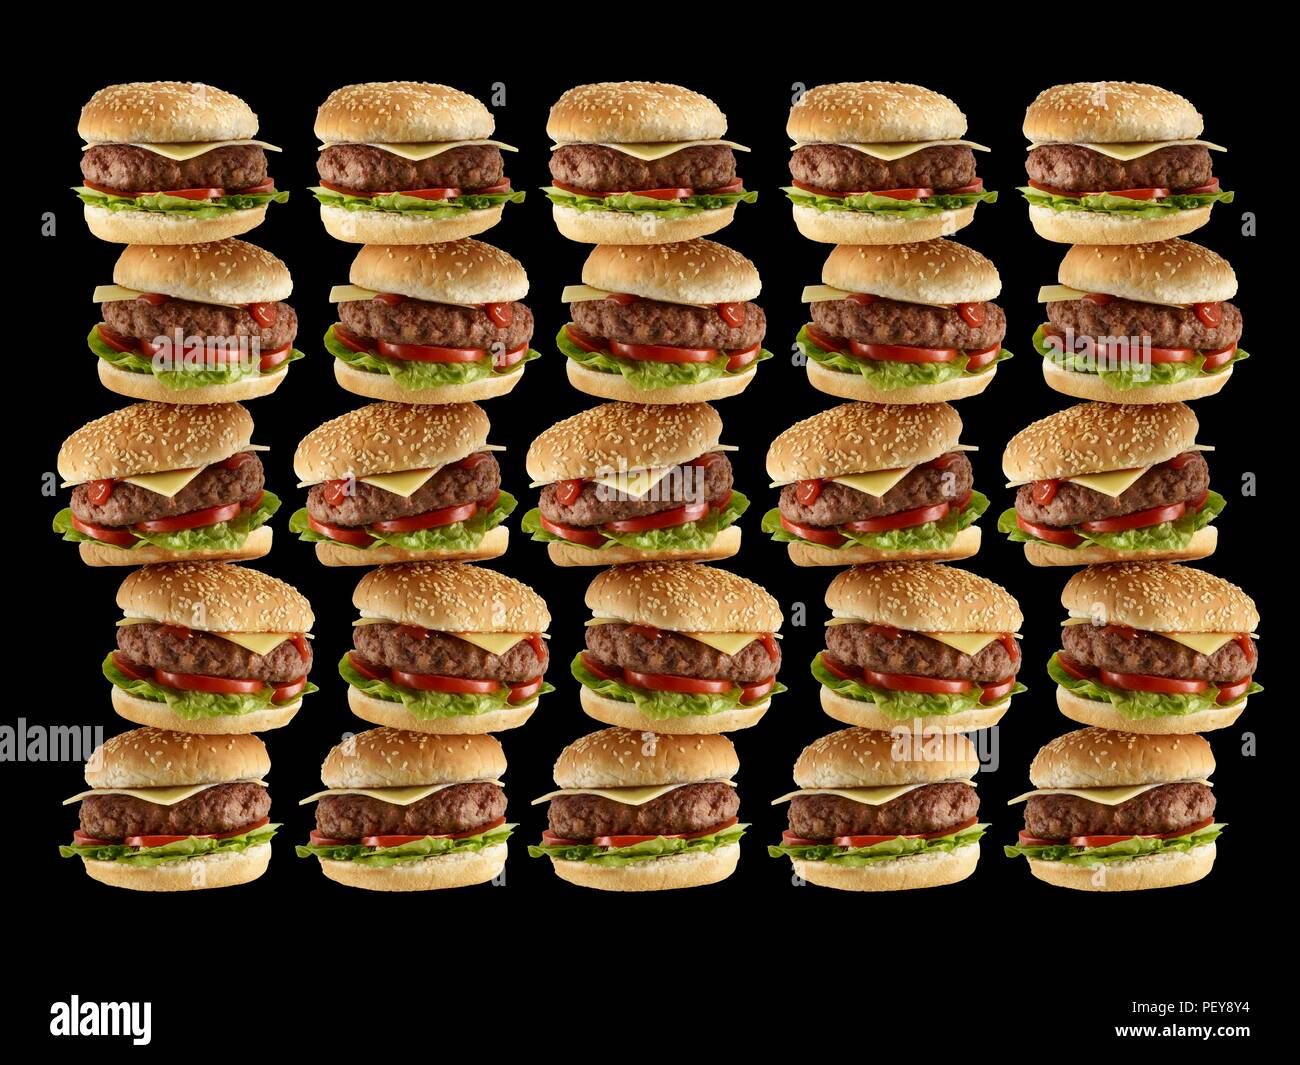 Stacks of hamburgers. Stock Photo